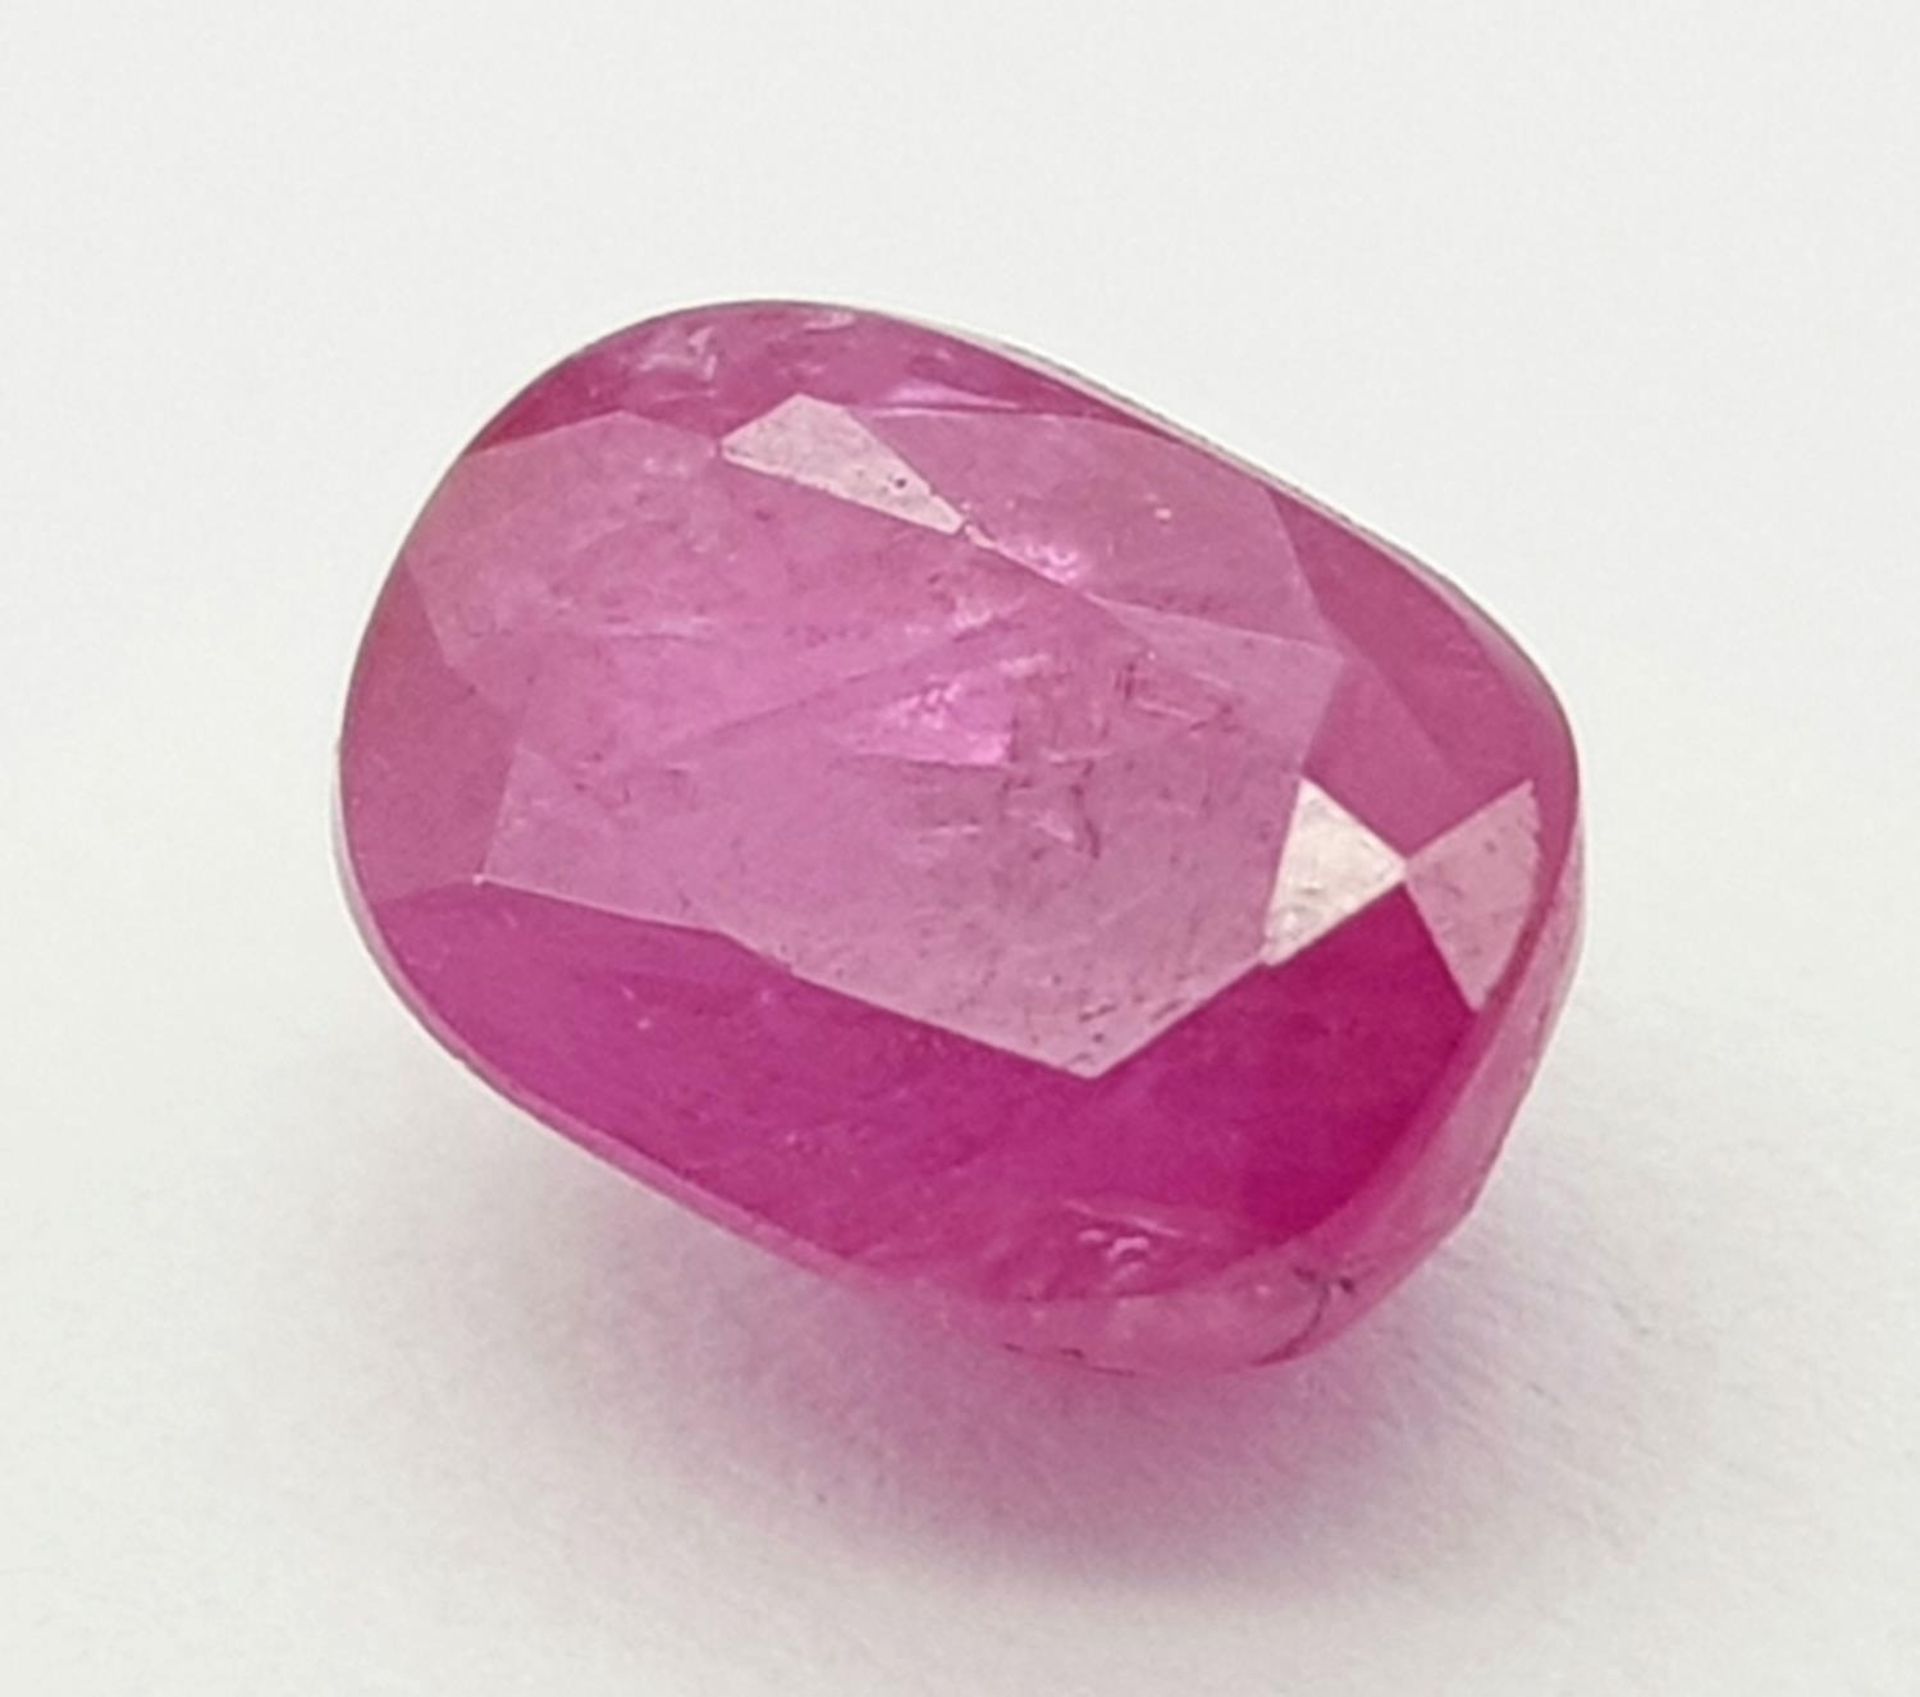 A 1.63ct Untreated Rare Burma Ruby Gemstone - GFCO Swiss Certified.